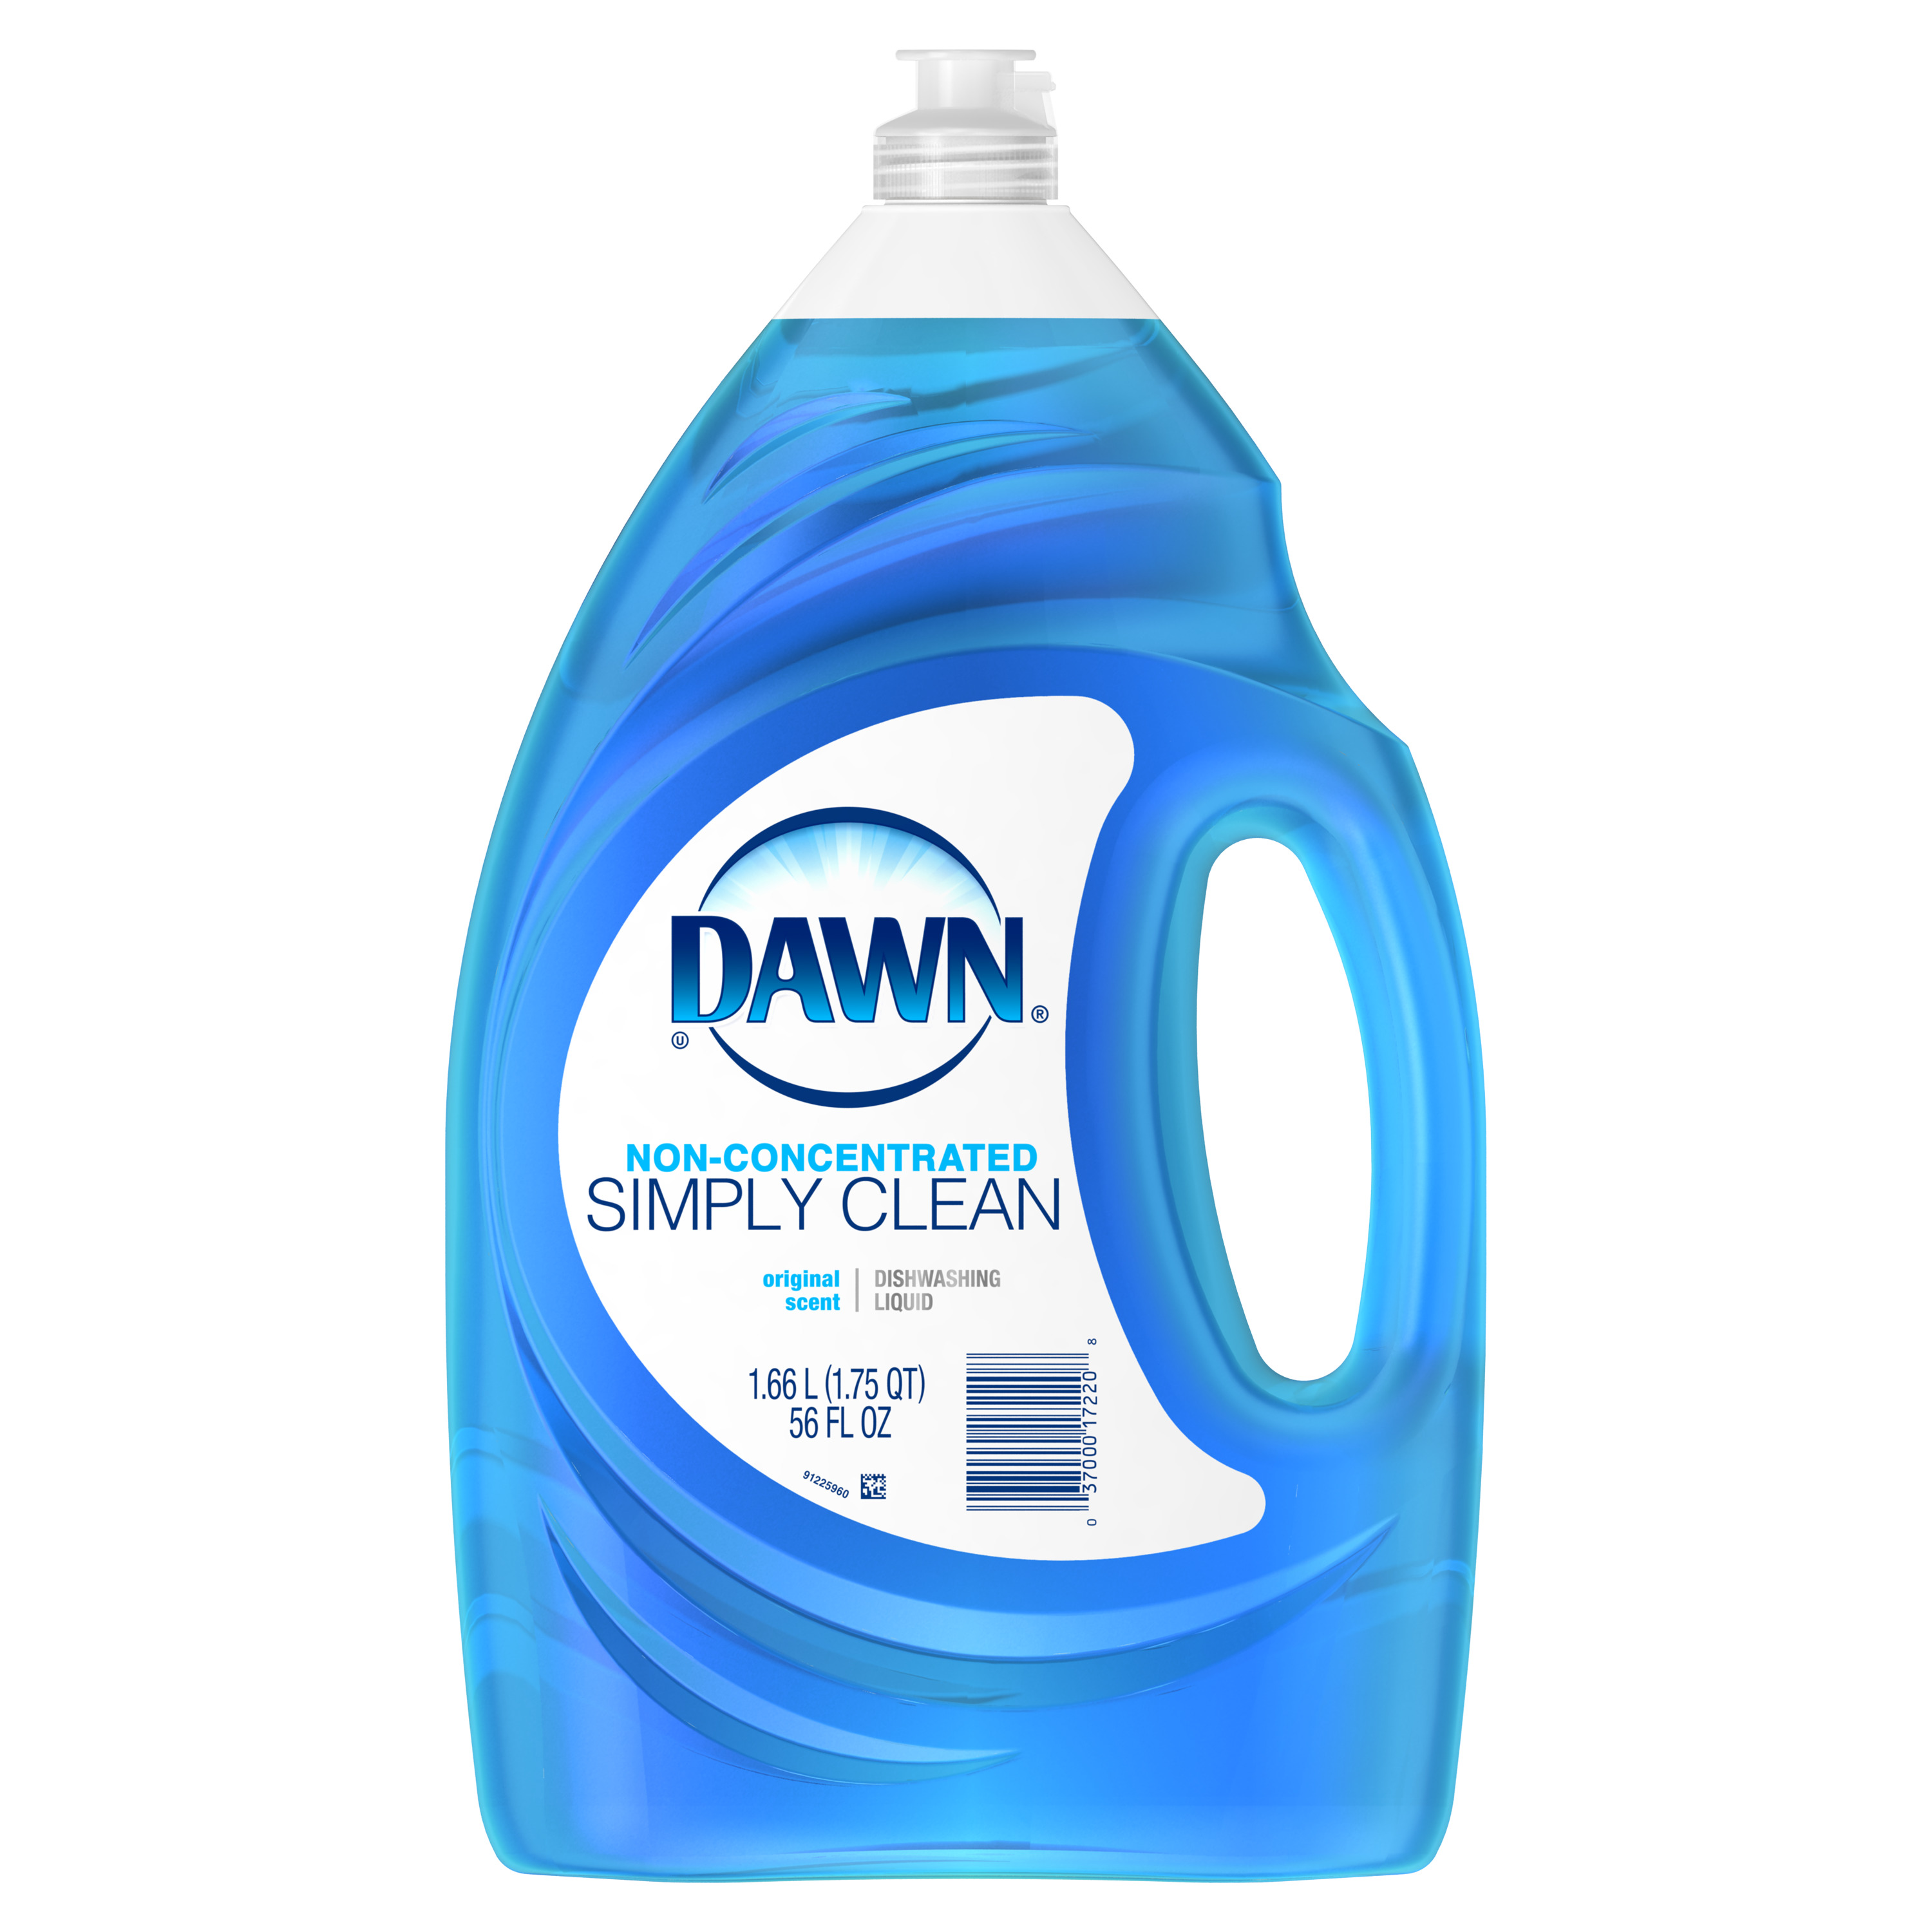 Dawn Simply Clean Dishwashing Liquid Dish Soap, Original Scent, 56 fl oz - image 1 of 5